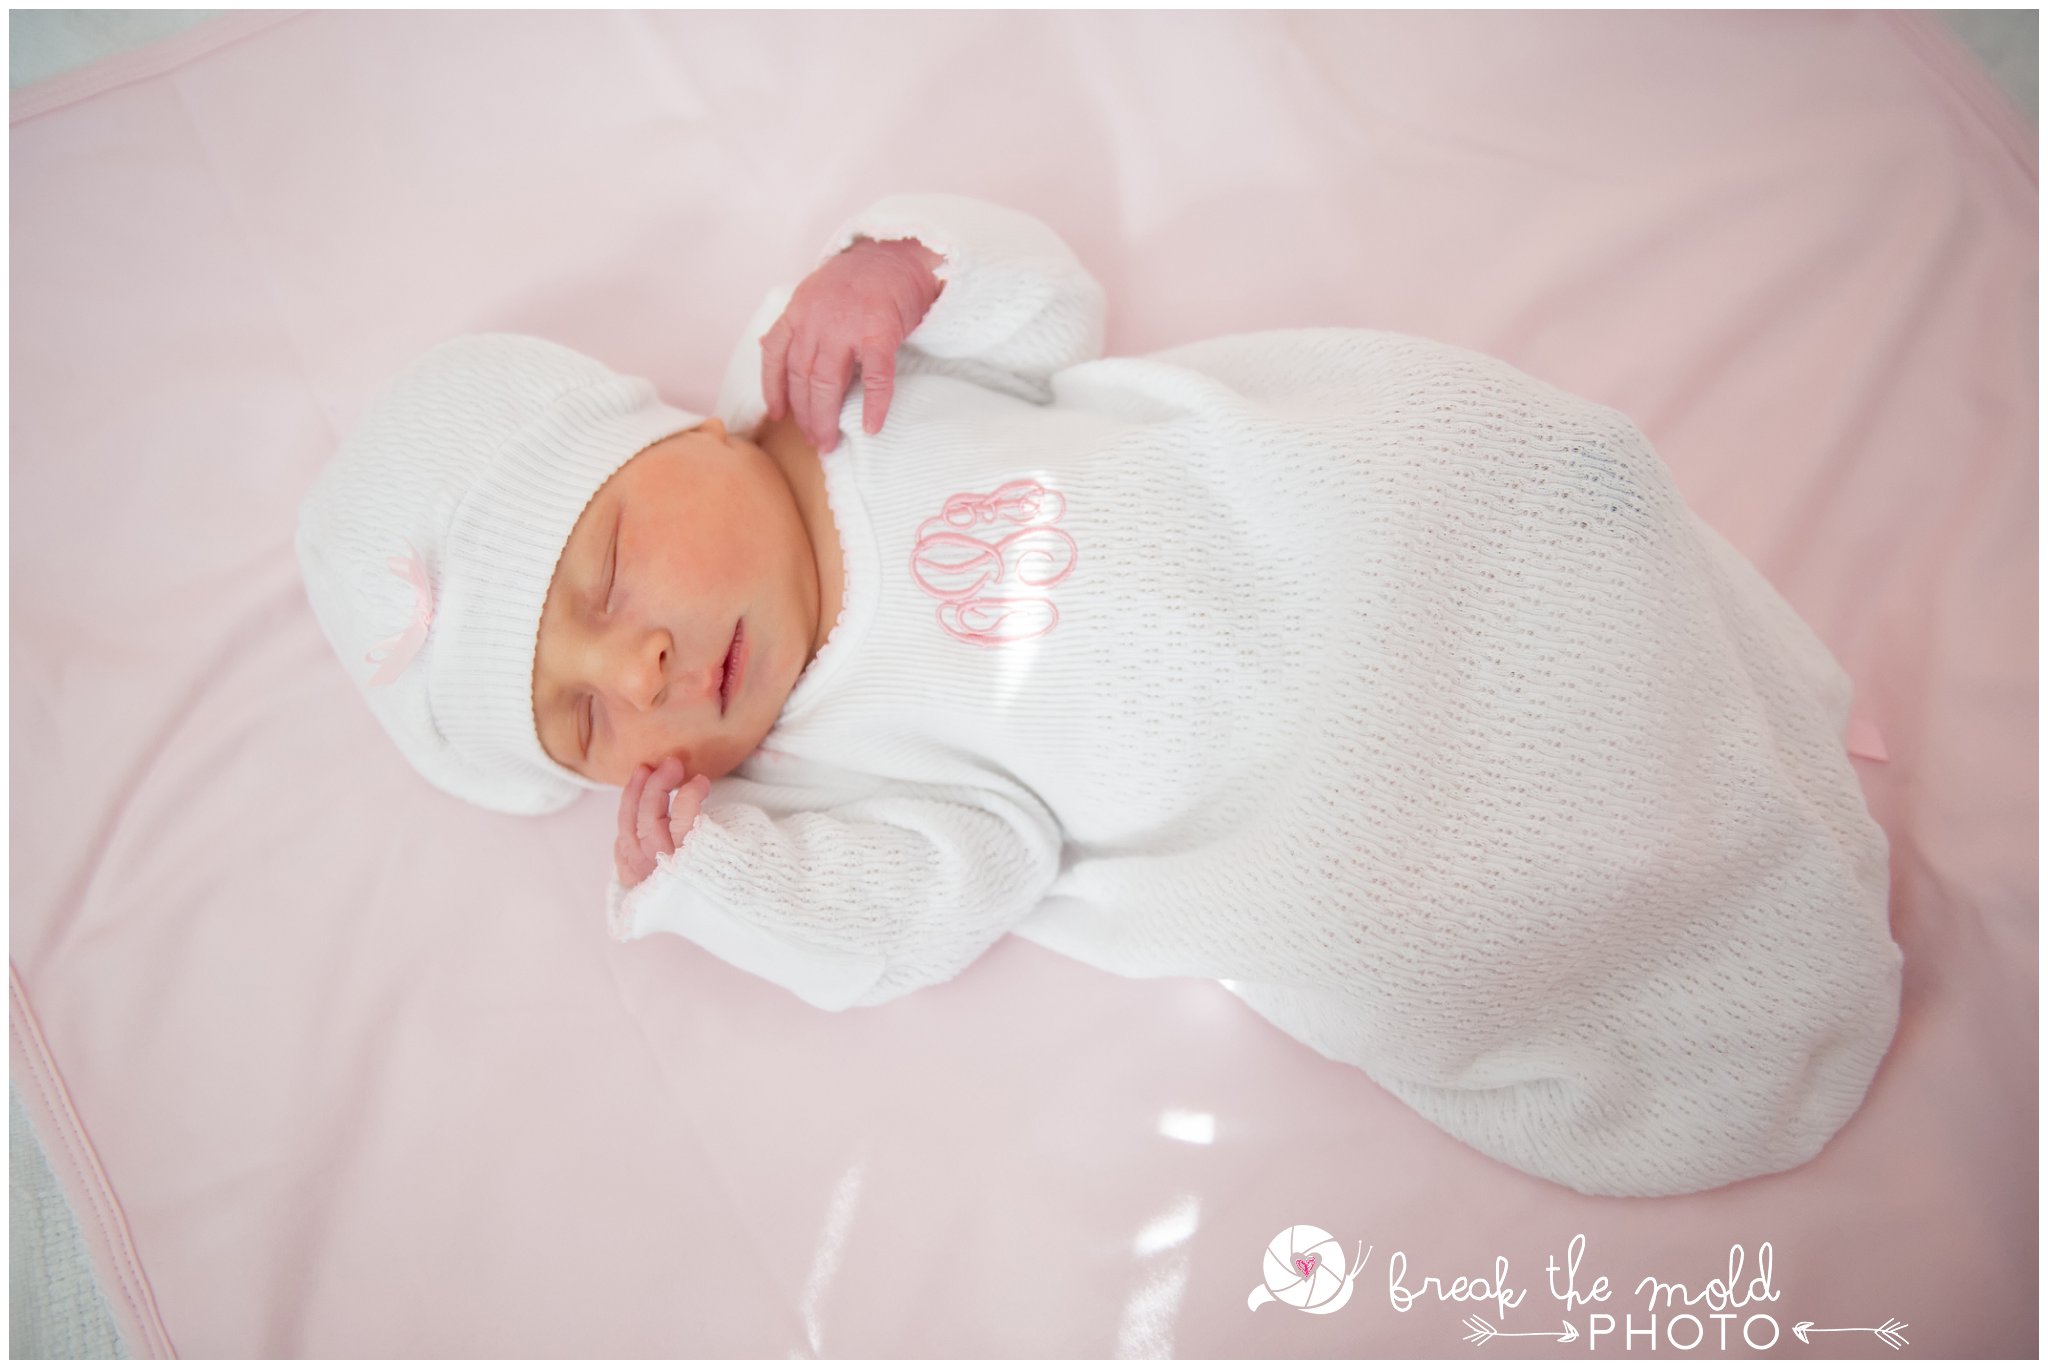 fresh-24-newborn-in-hospital-break-the-mold-photo-baby-girl-sweet-in-room-photos (23).jpg